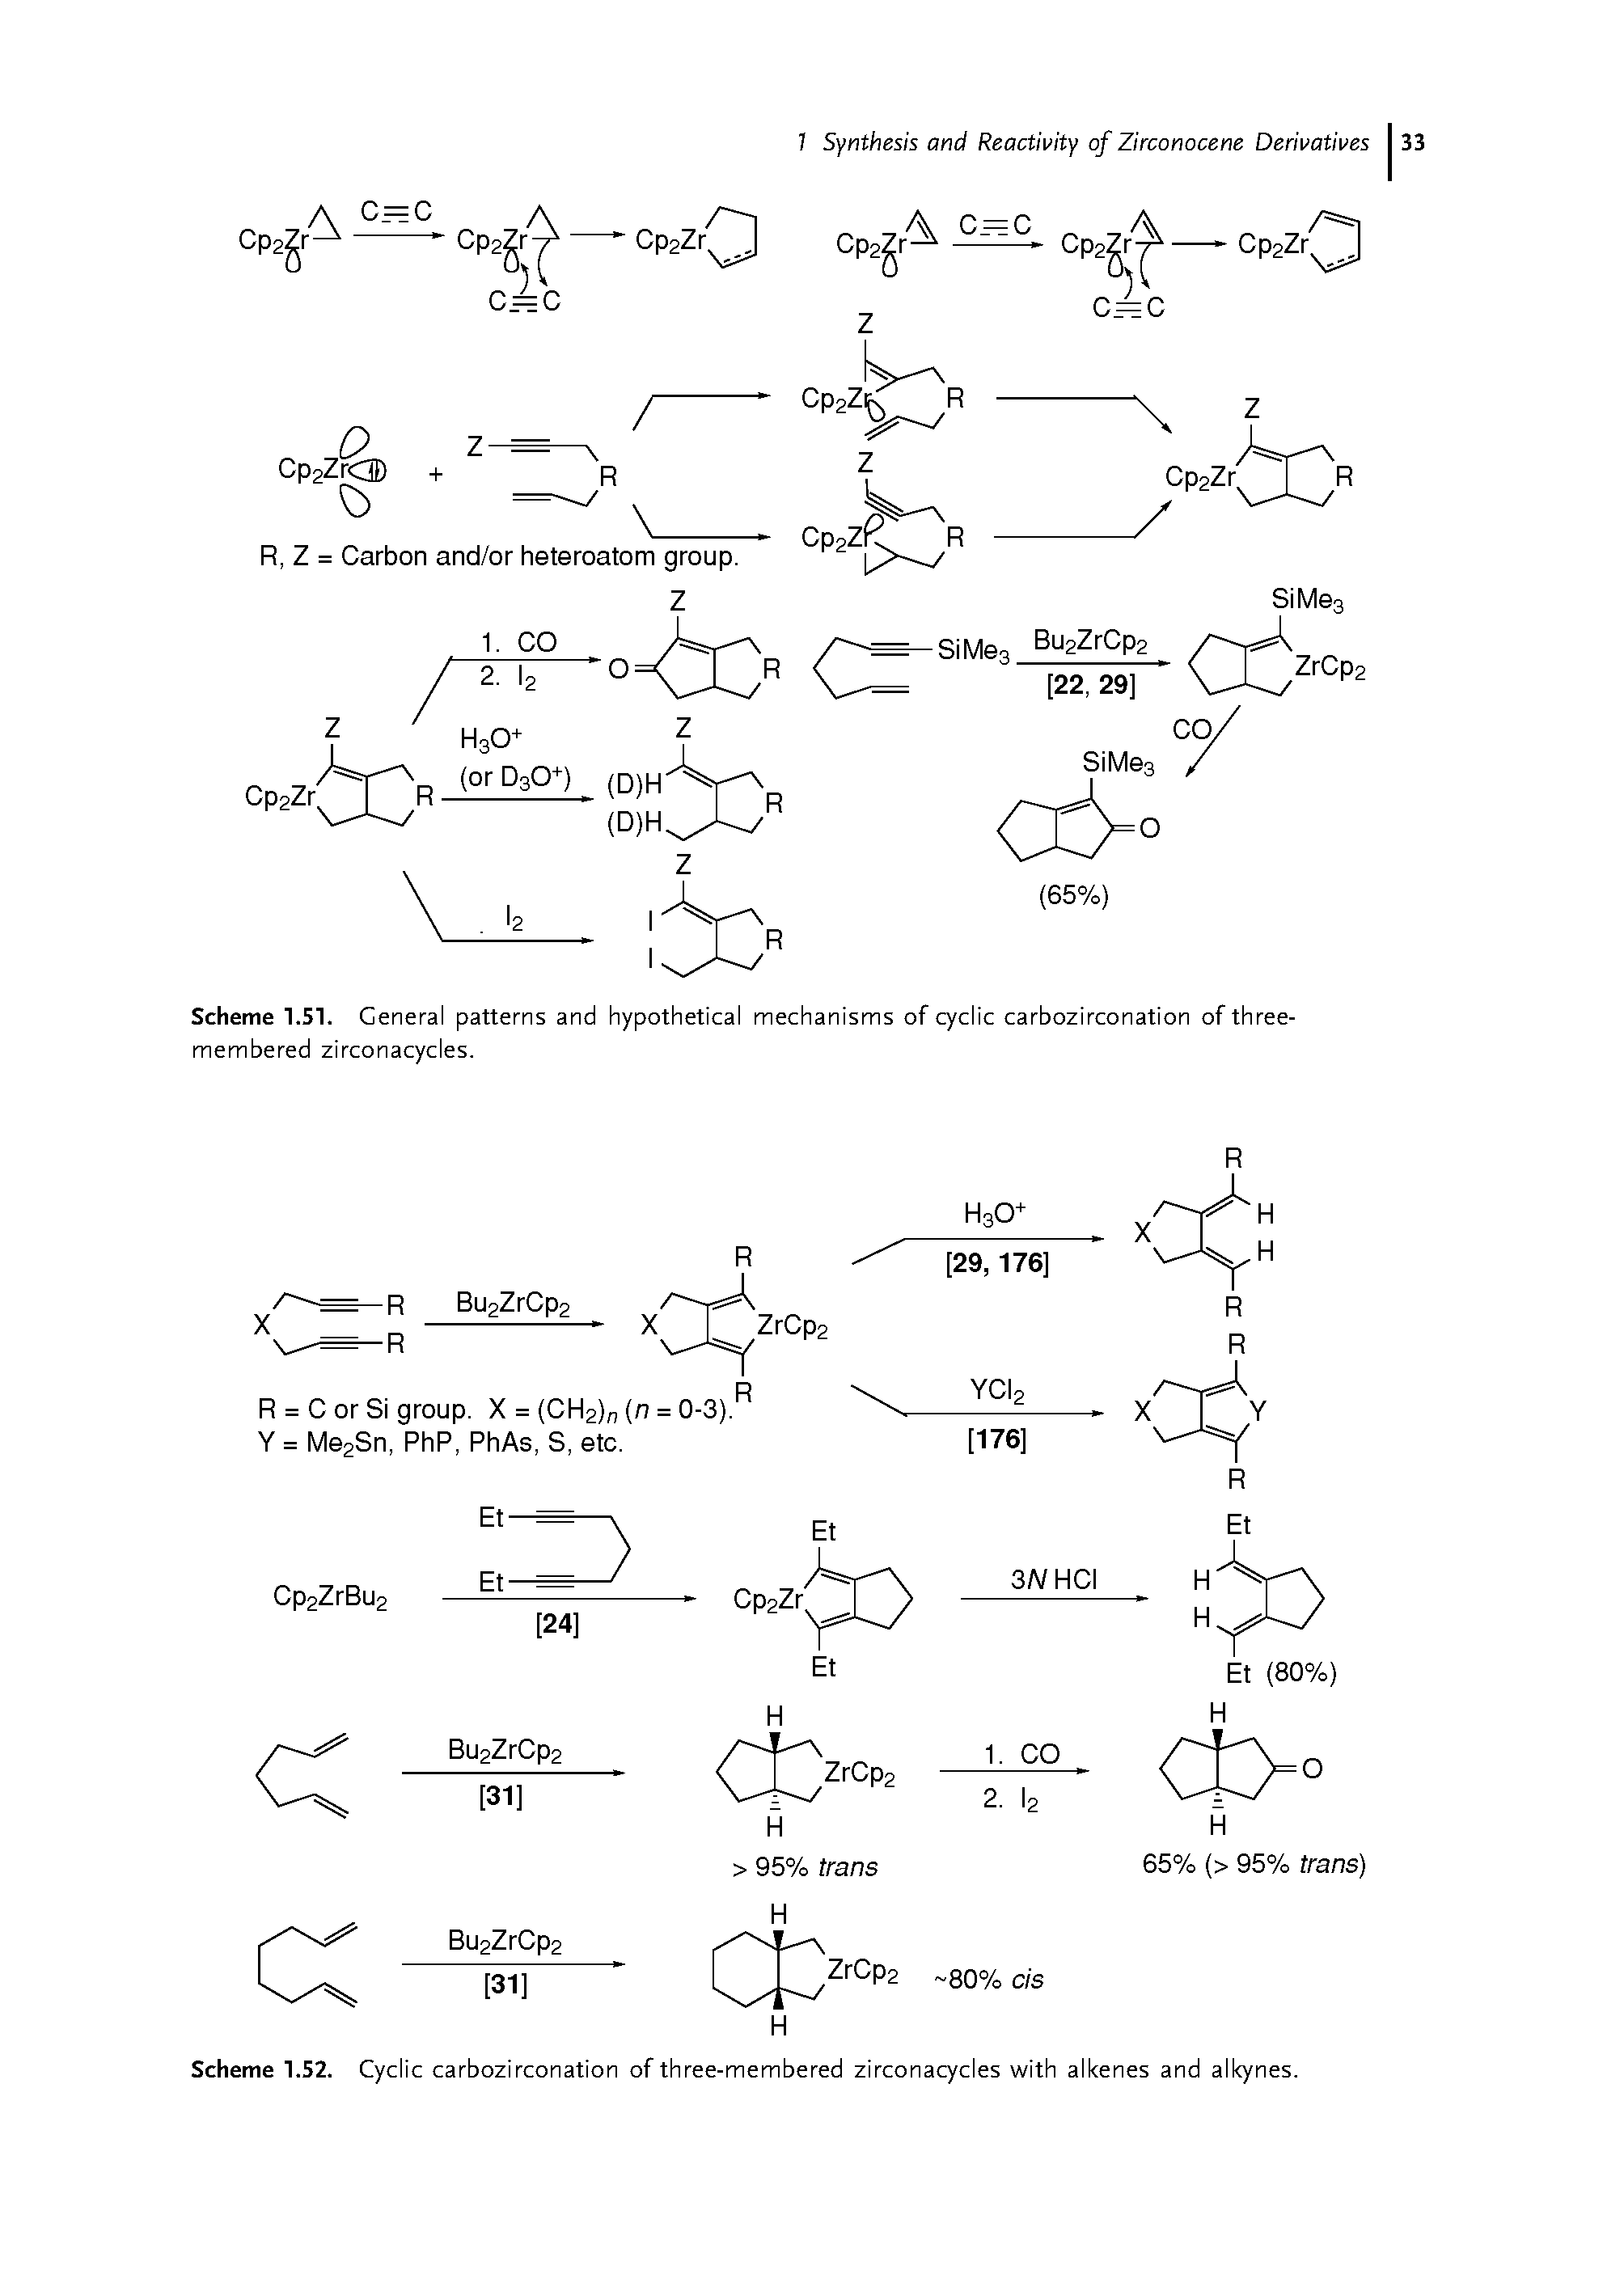 Scheme 1.52. Cyclic carbozirconation of three-membered zirconacycles with alkenes and alkynes.